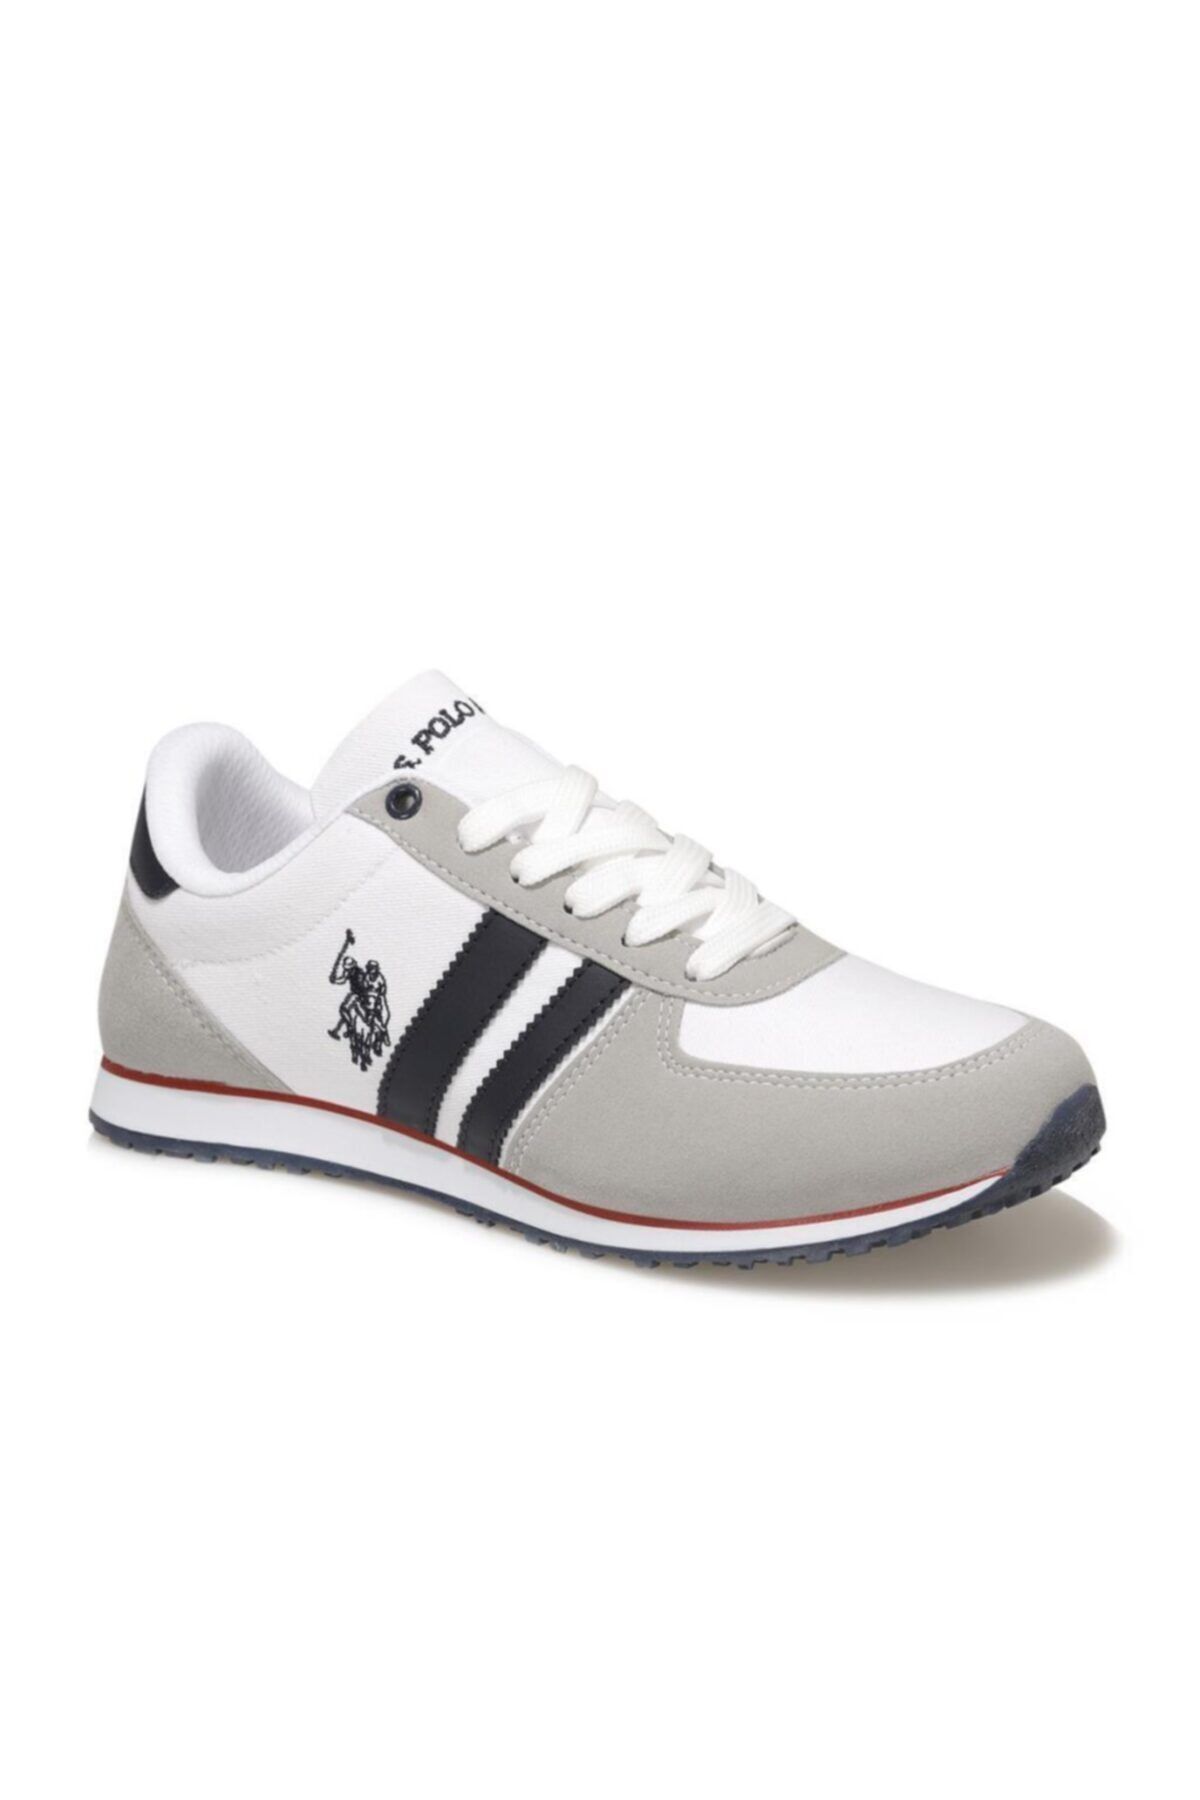 U.S. Polo Assn. Erkek Beyaz Mesh Comfort Casual Sneaker Ayakkabı